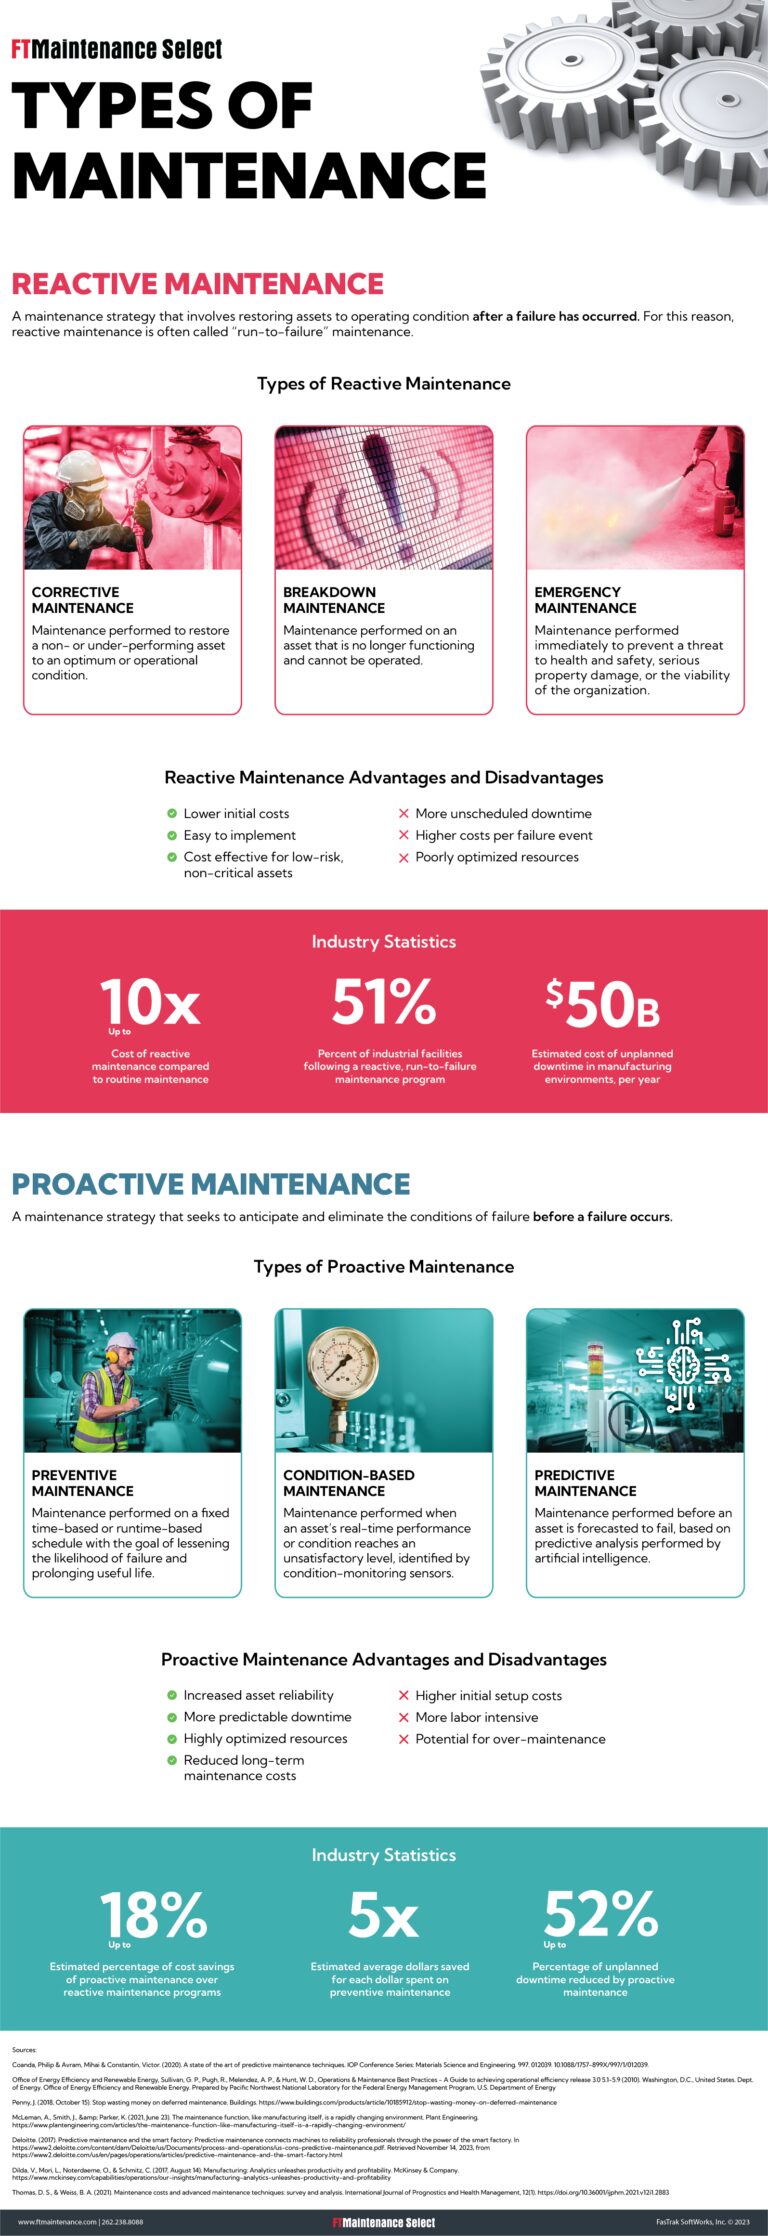 infographic-types-of-maintenance-ftmaintenance-cmms